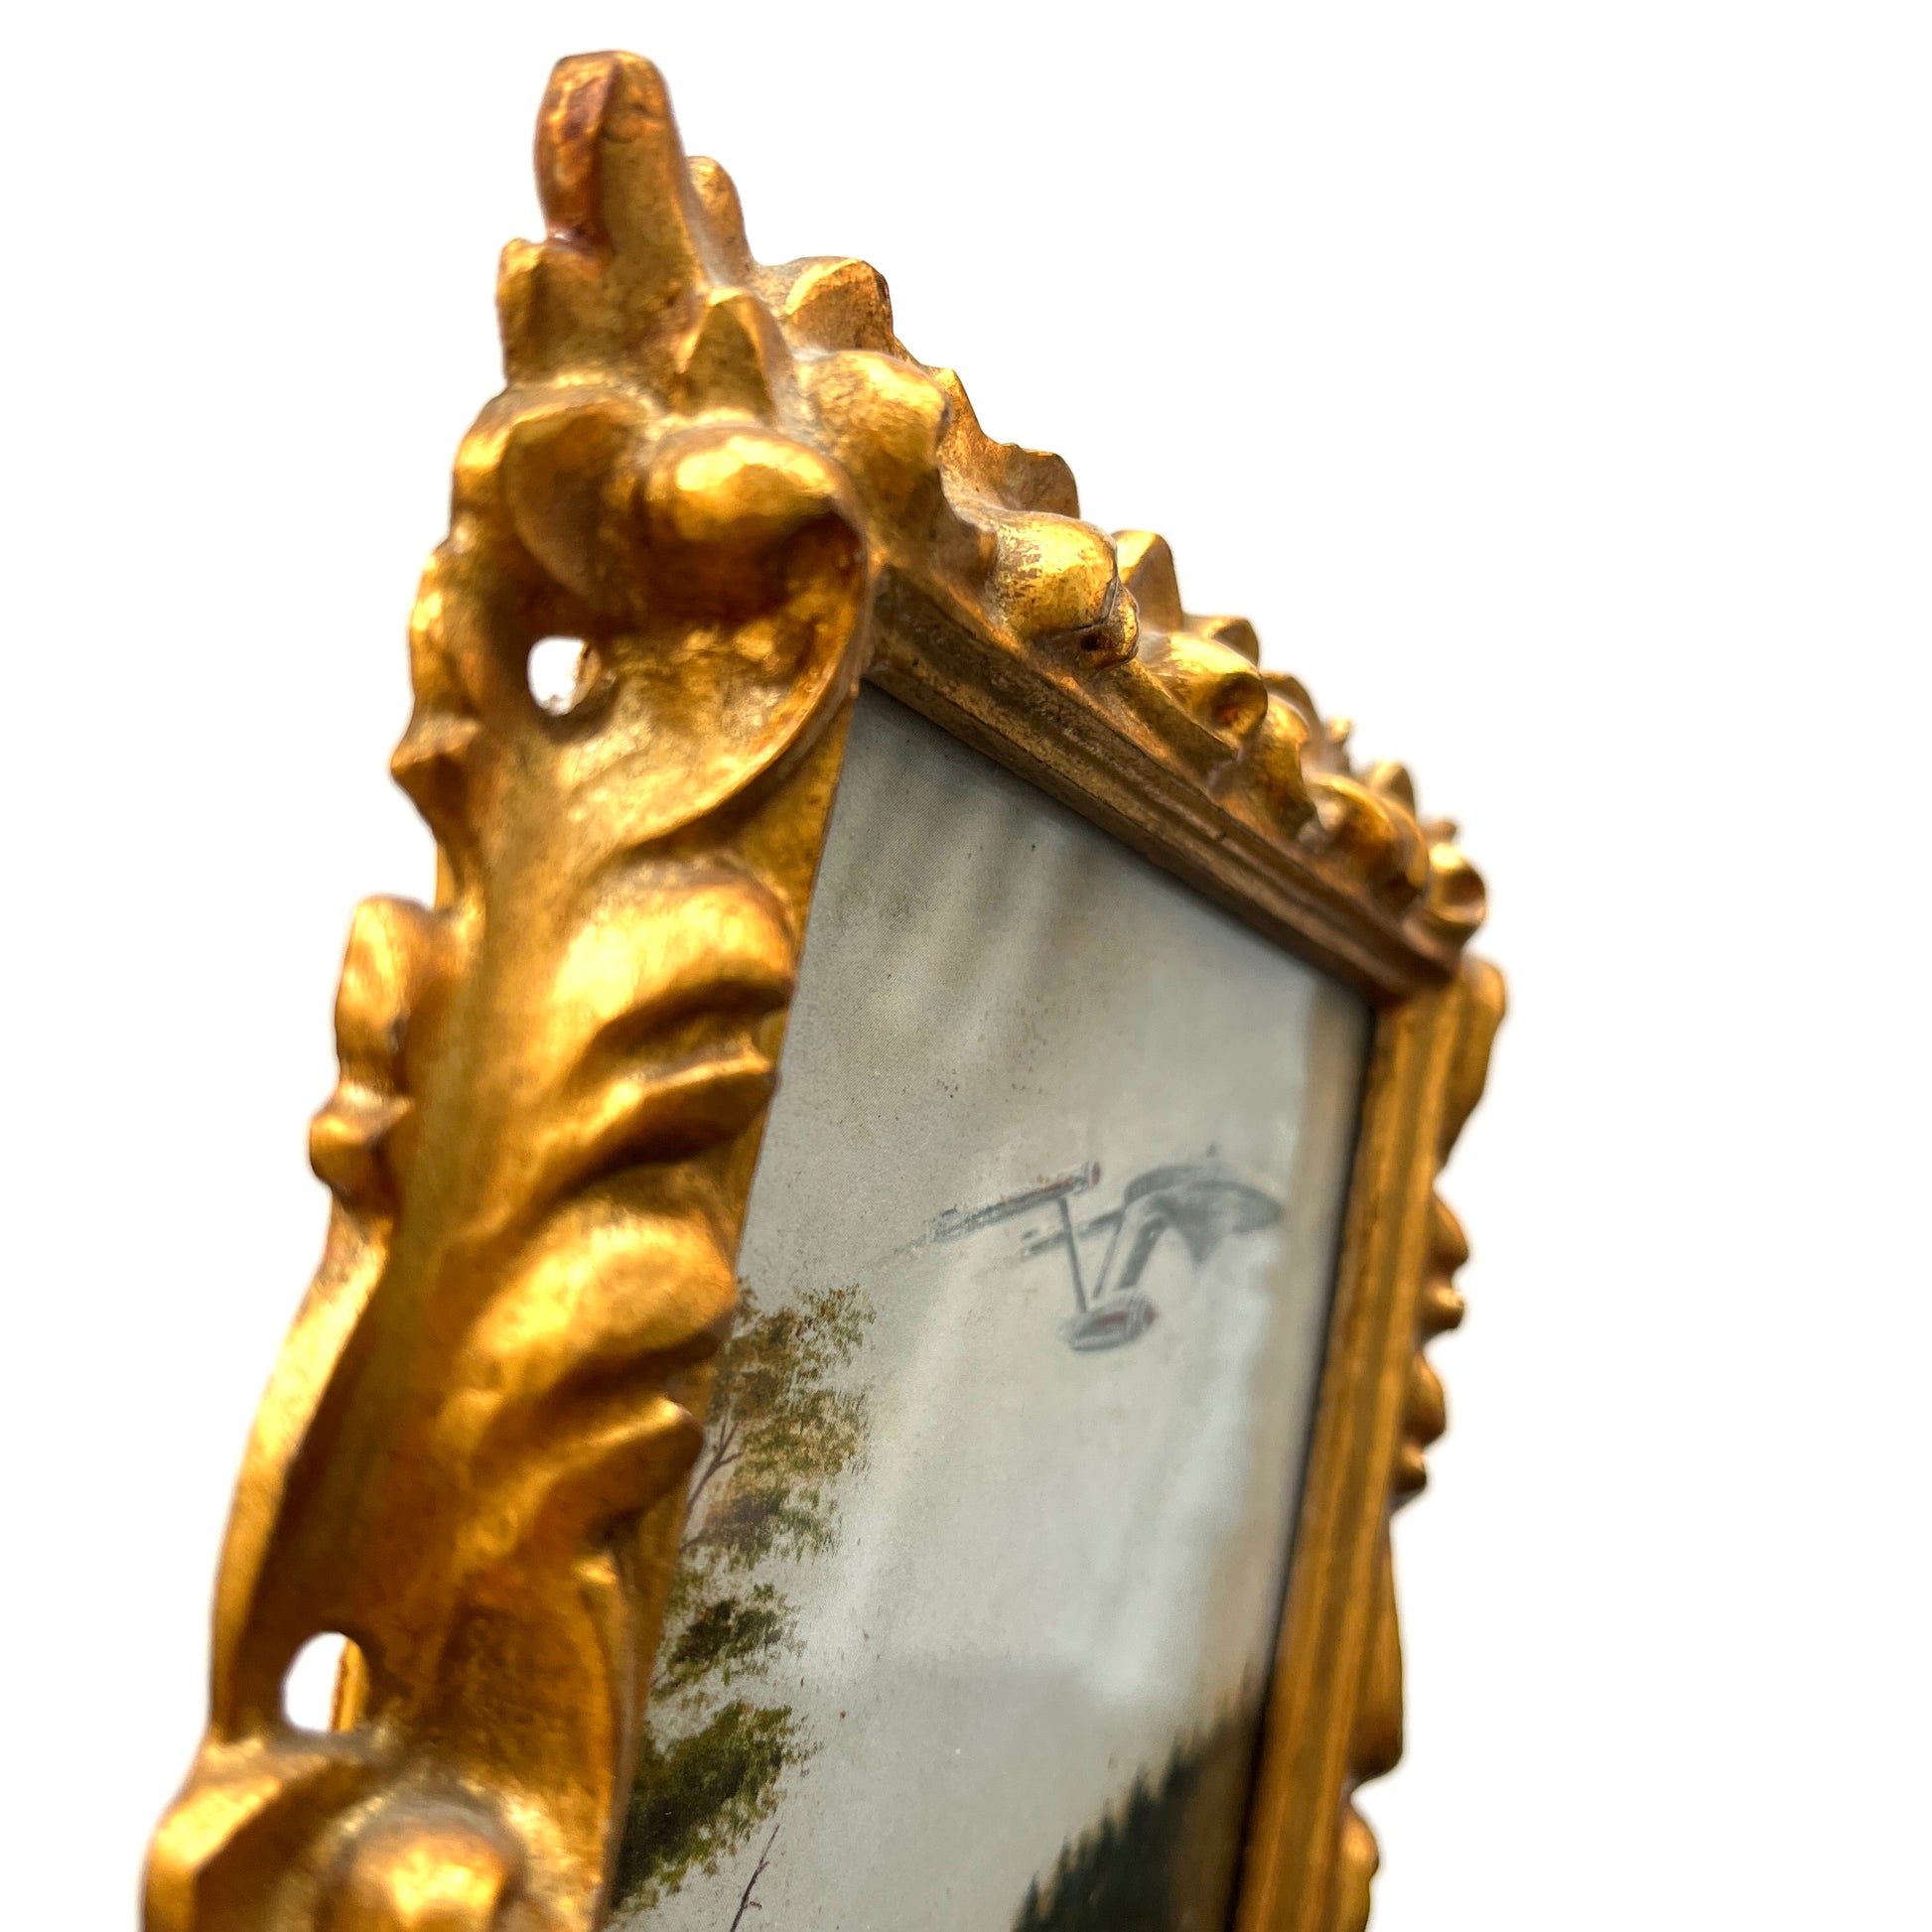 Antique Gold Wood Open Frame